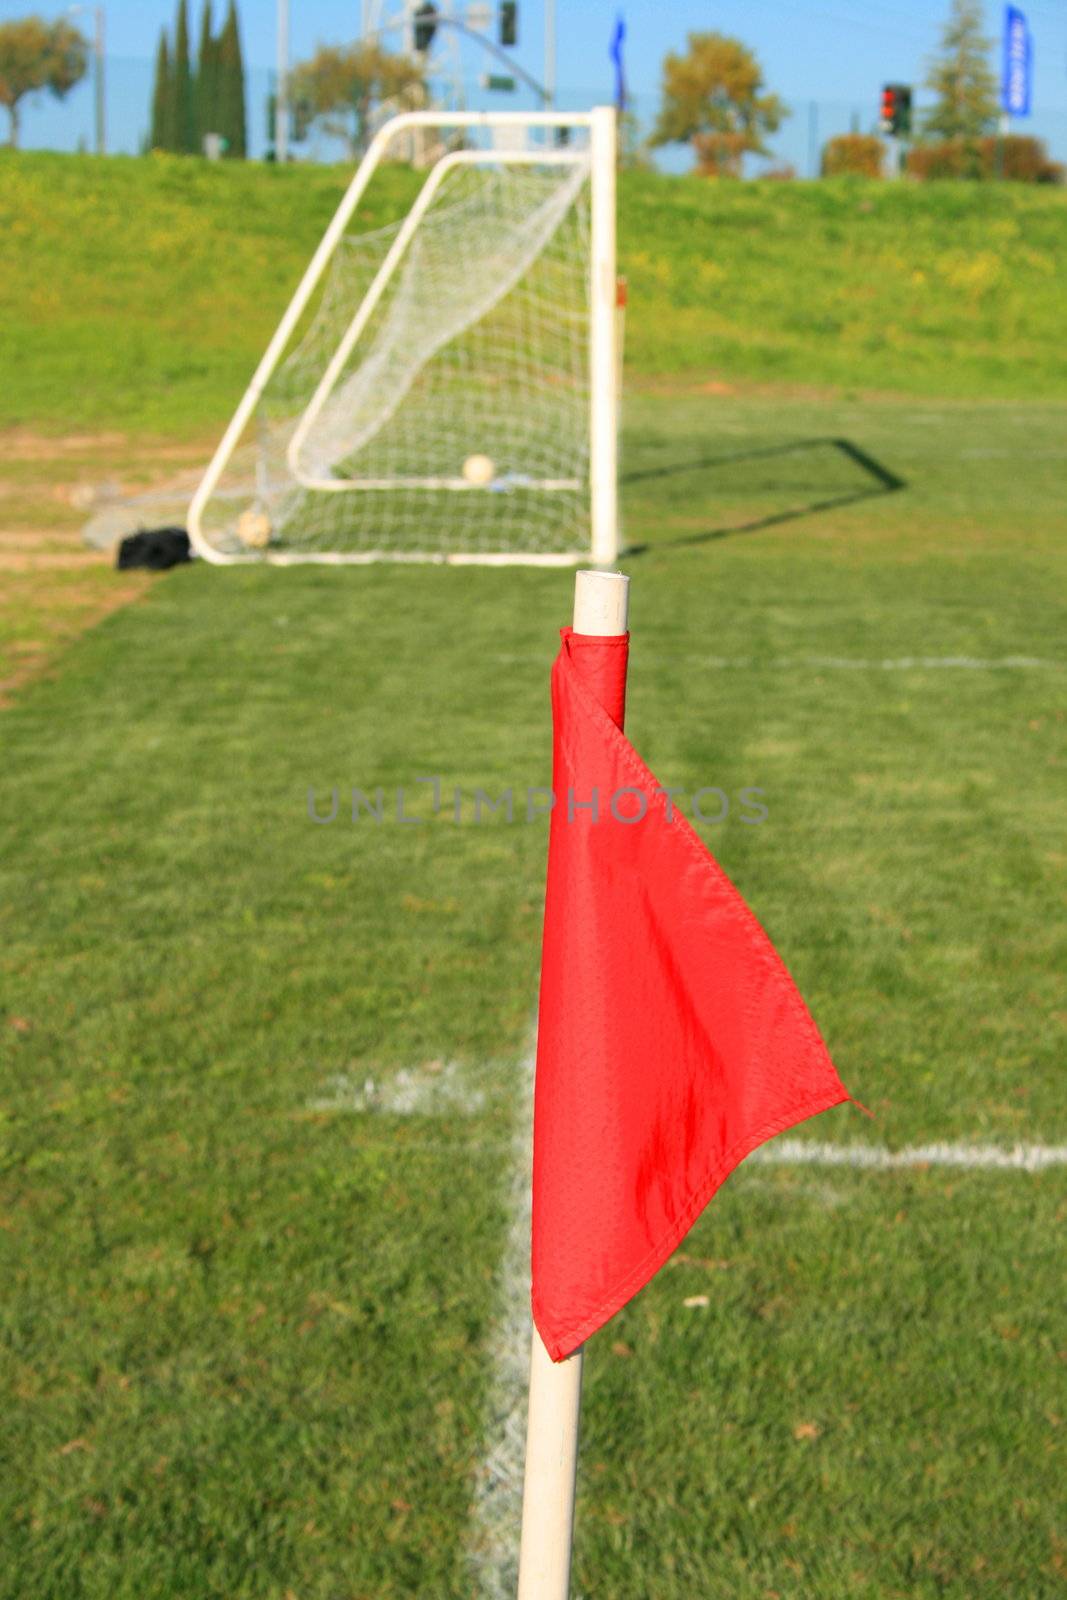 Red corner flag on a soccer field.
